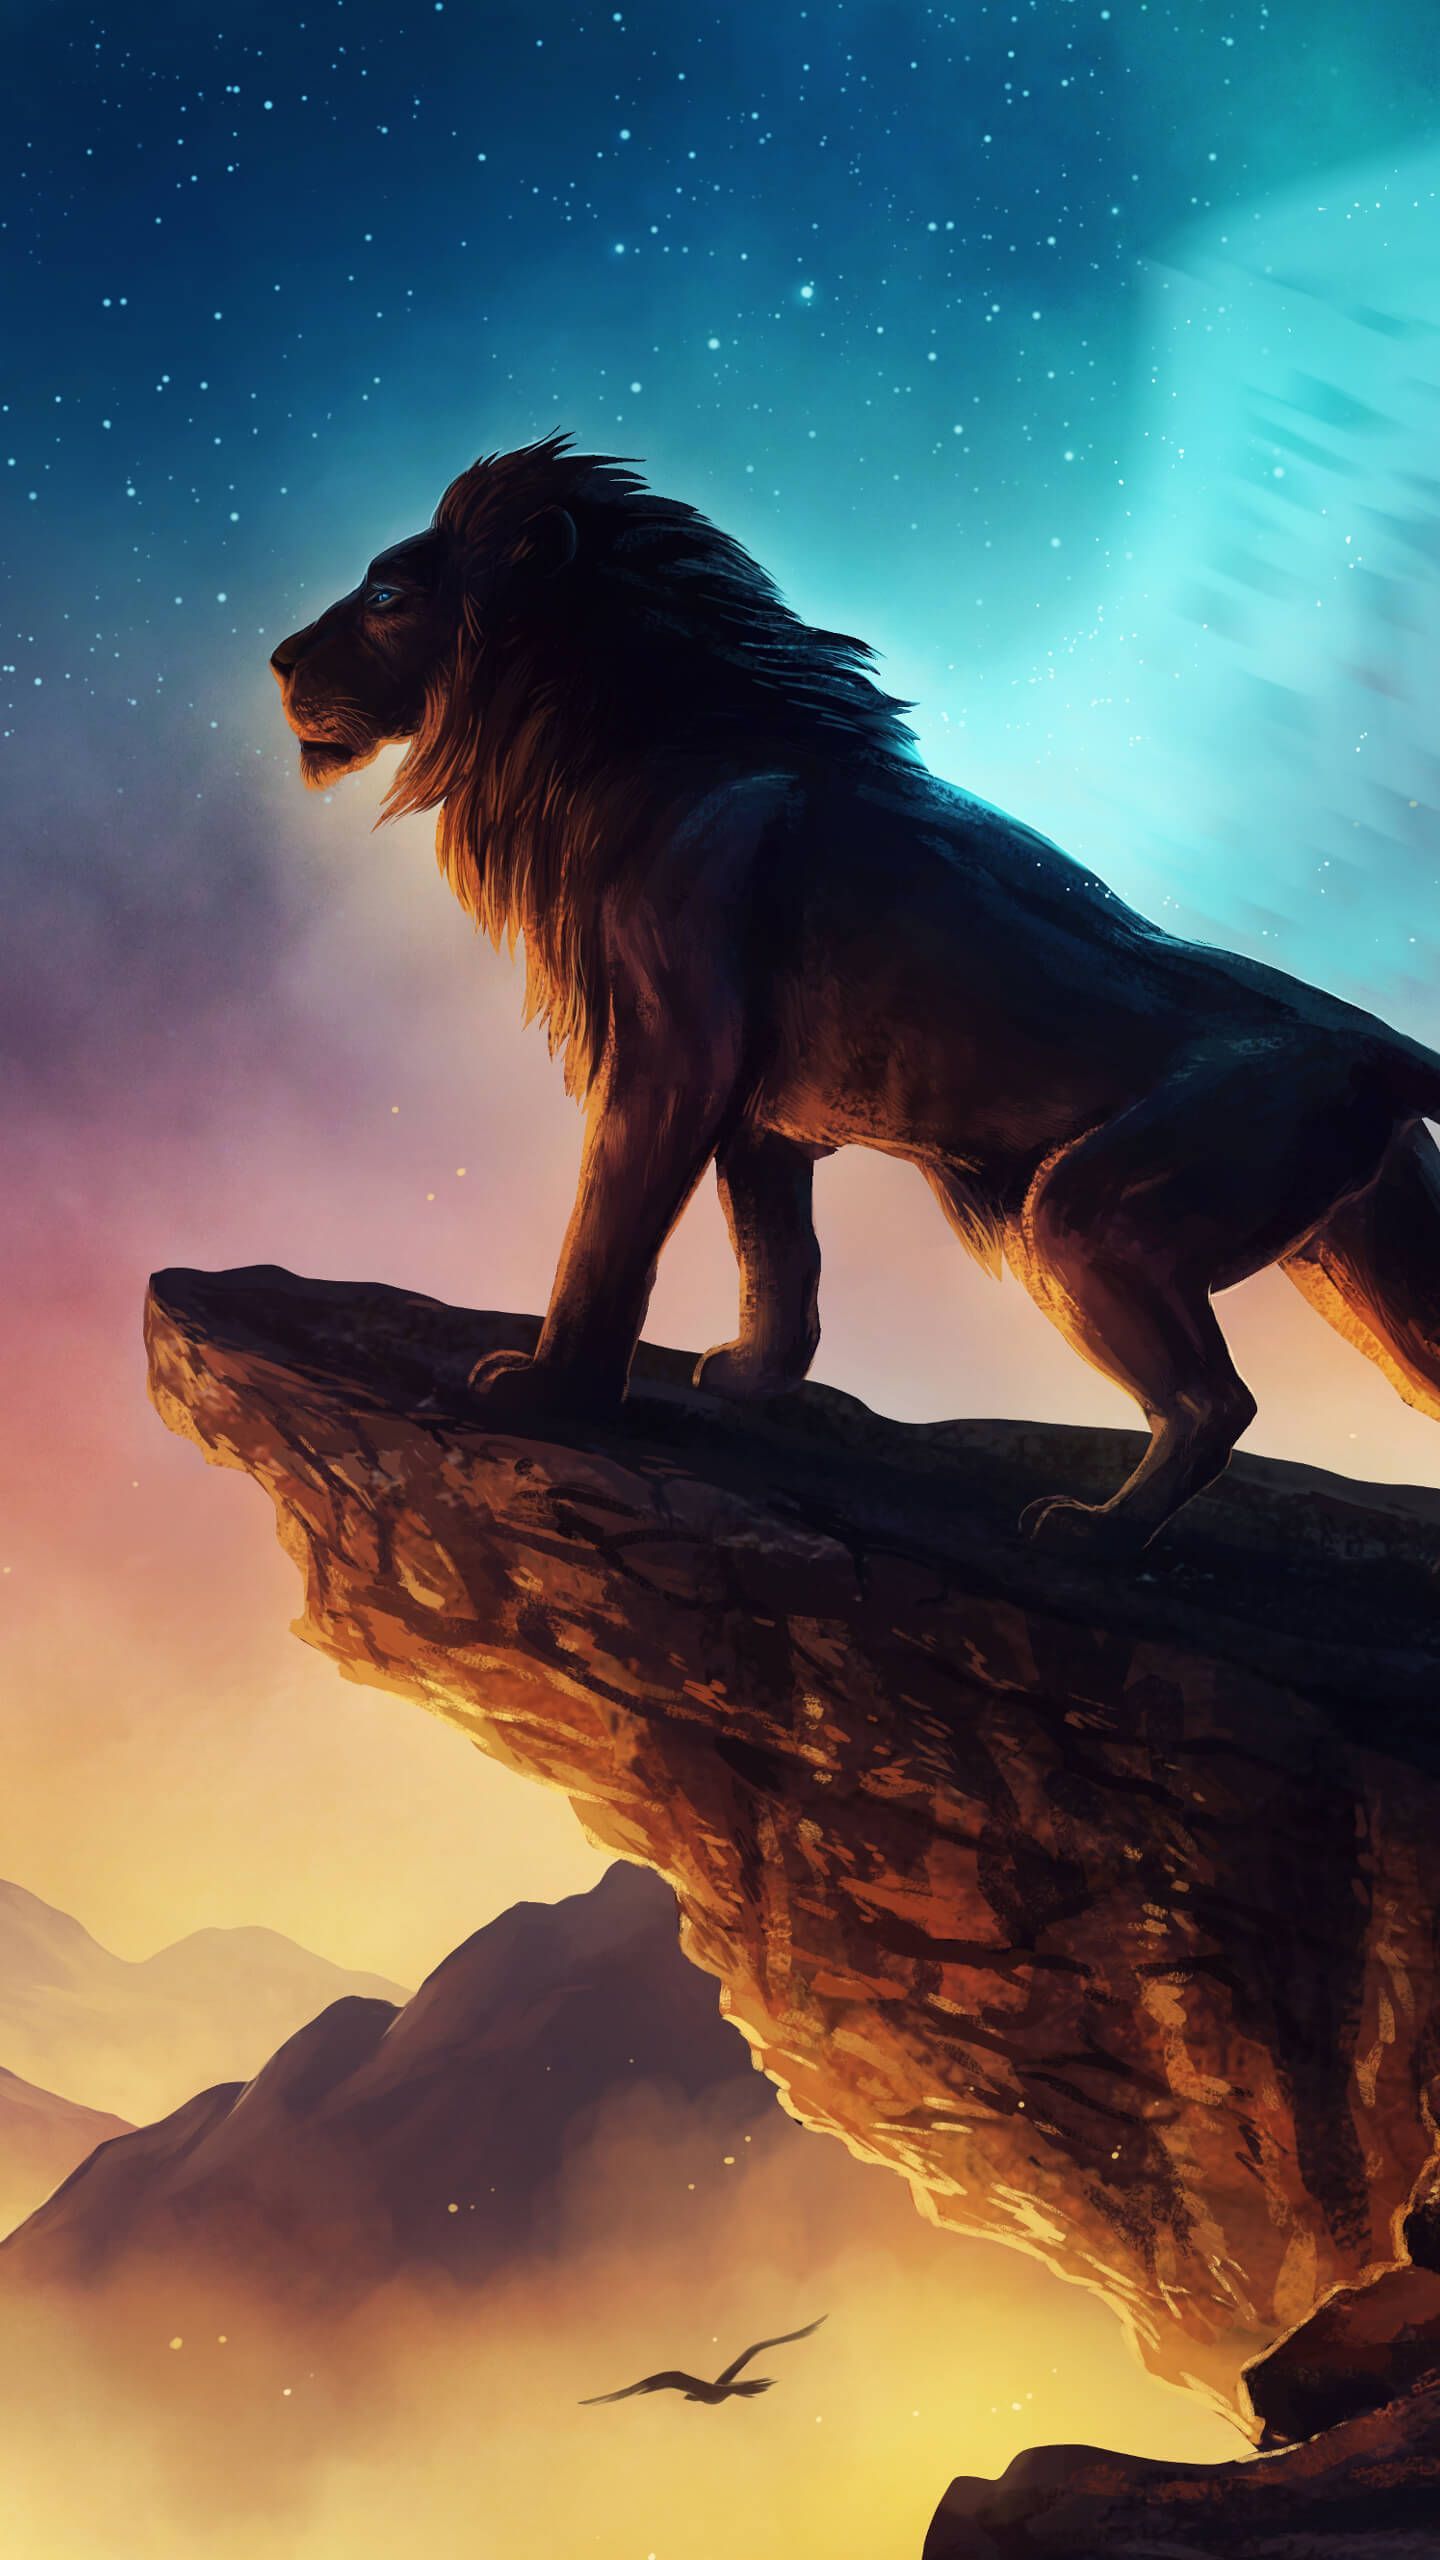 Lion King Background Images